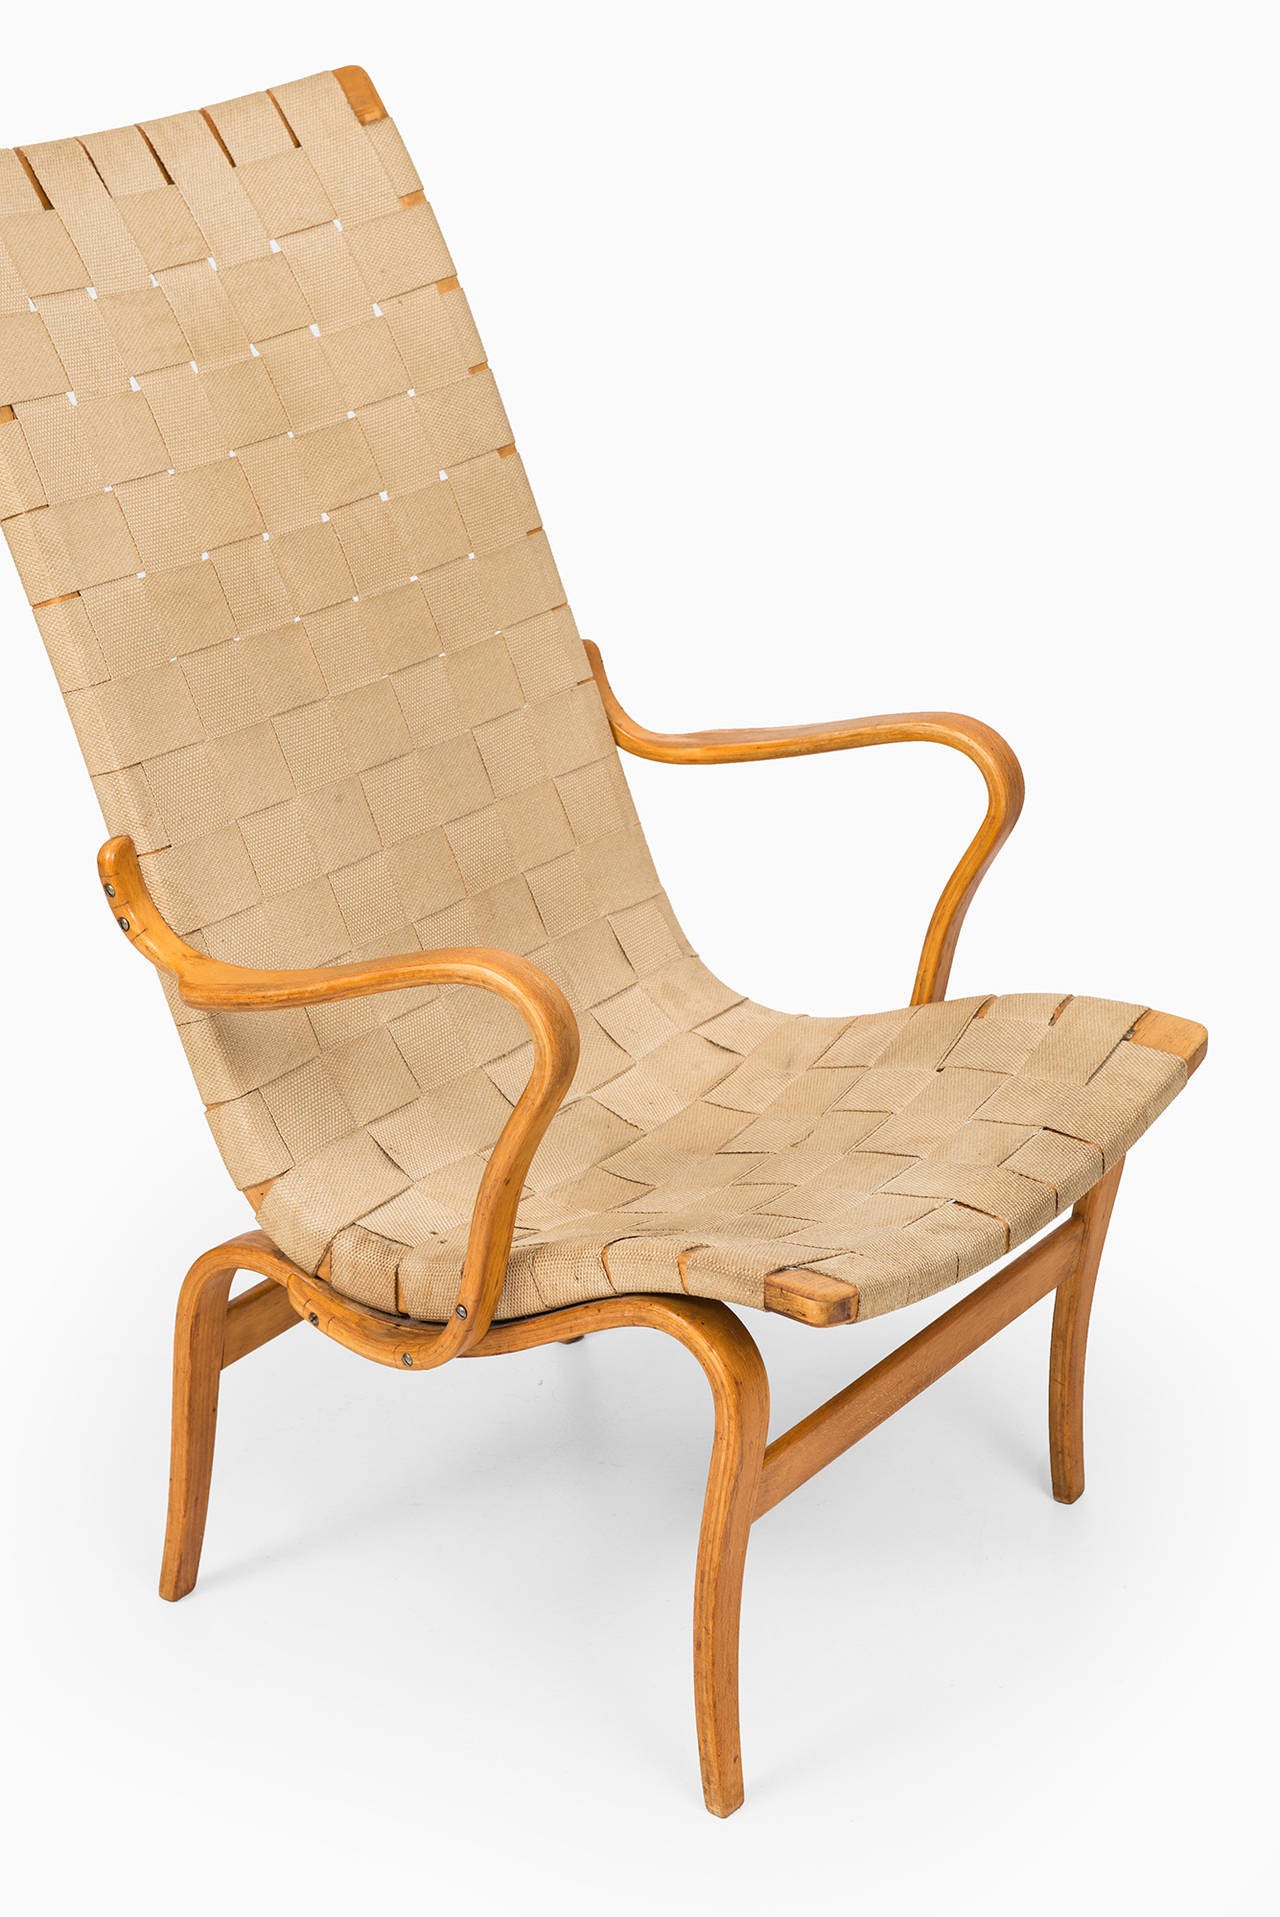 Swedish Bruno Mathsson High-Back Eva Chair, Produced by Karl Mathsson in Sweden